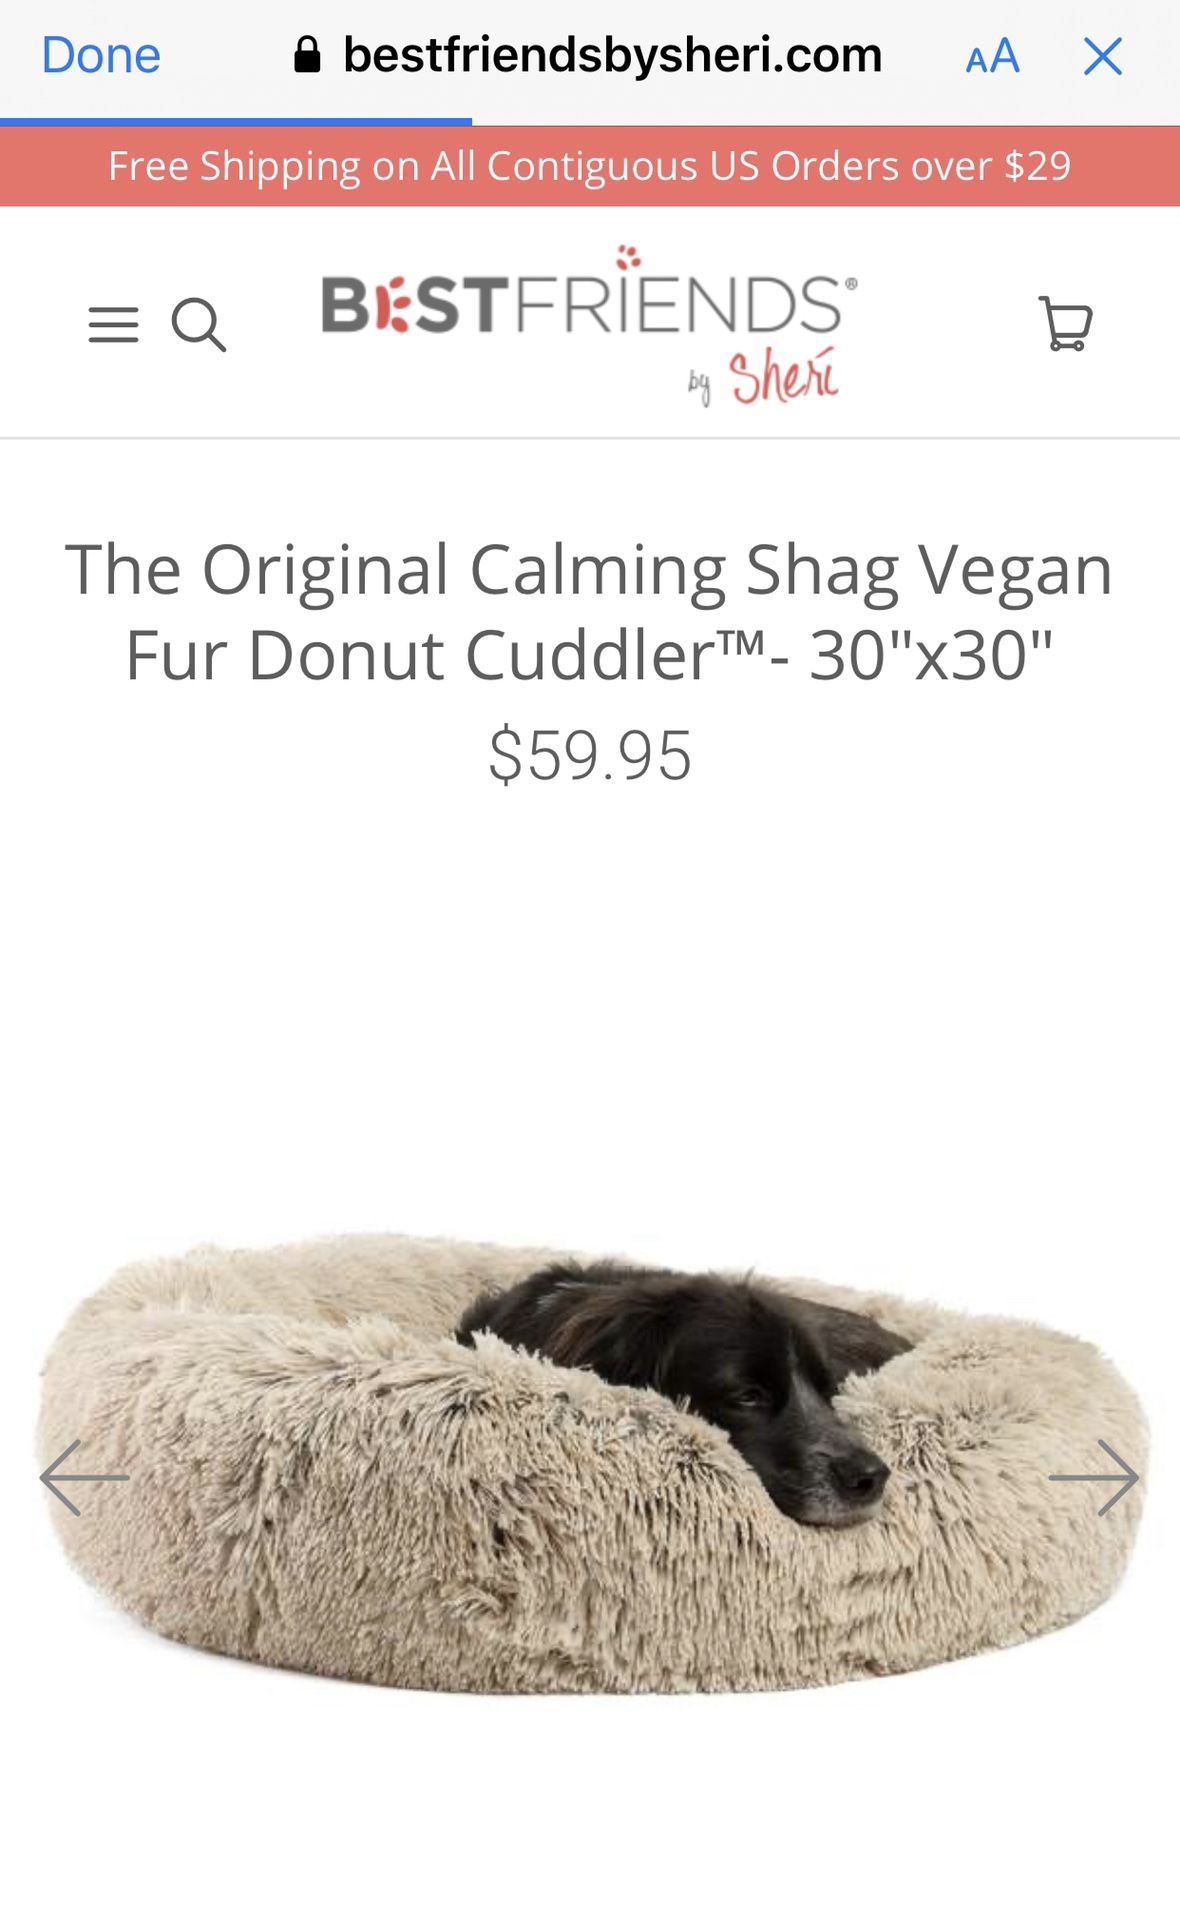 Best friends Sheri The Original Calming Shag Vegan Donut Cuddler